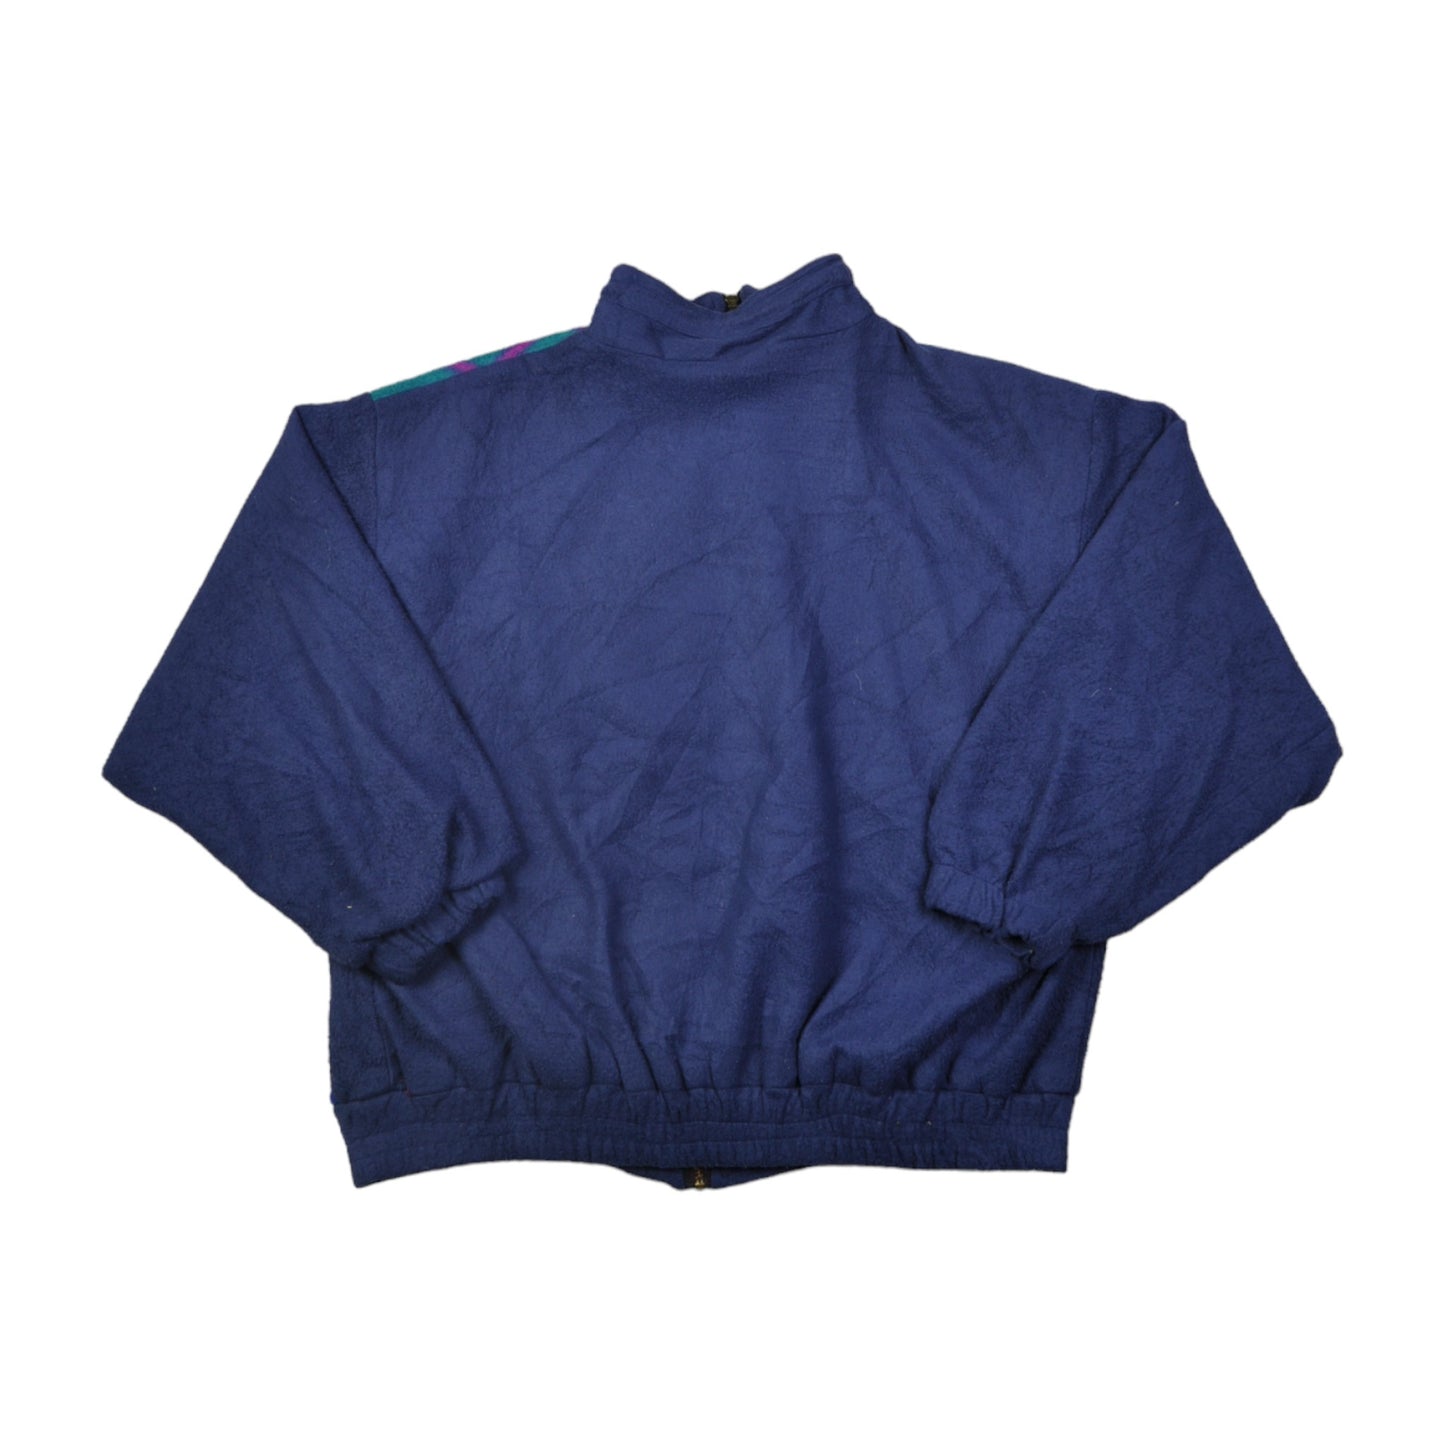 Vintage Fleece Jacket Retro Pattern Blue Large